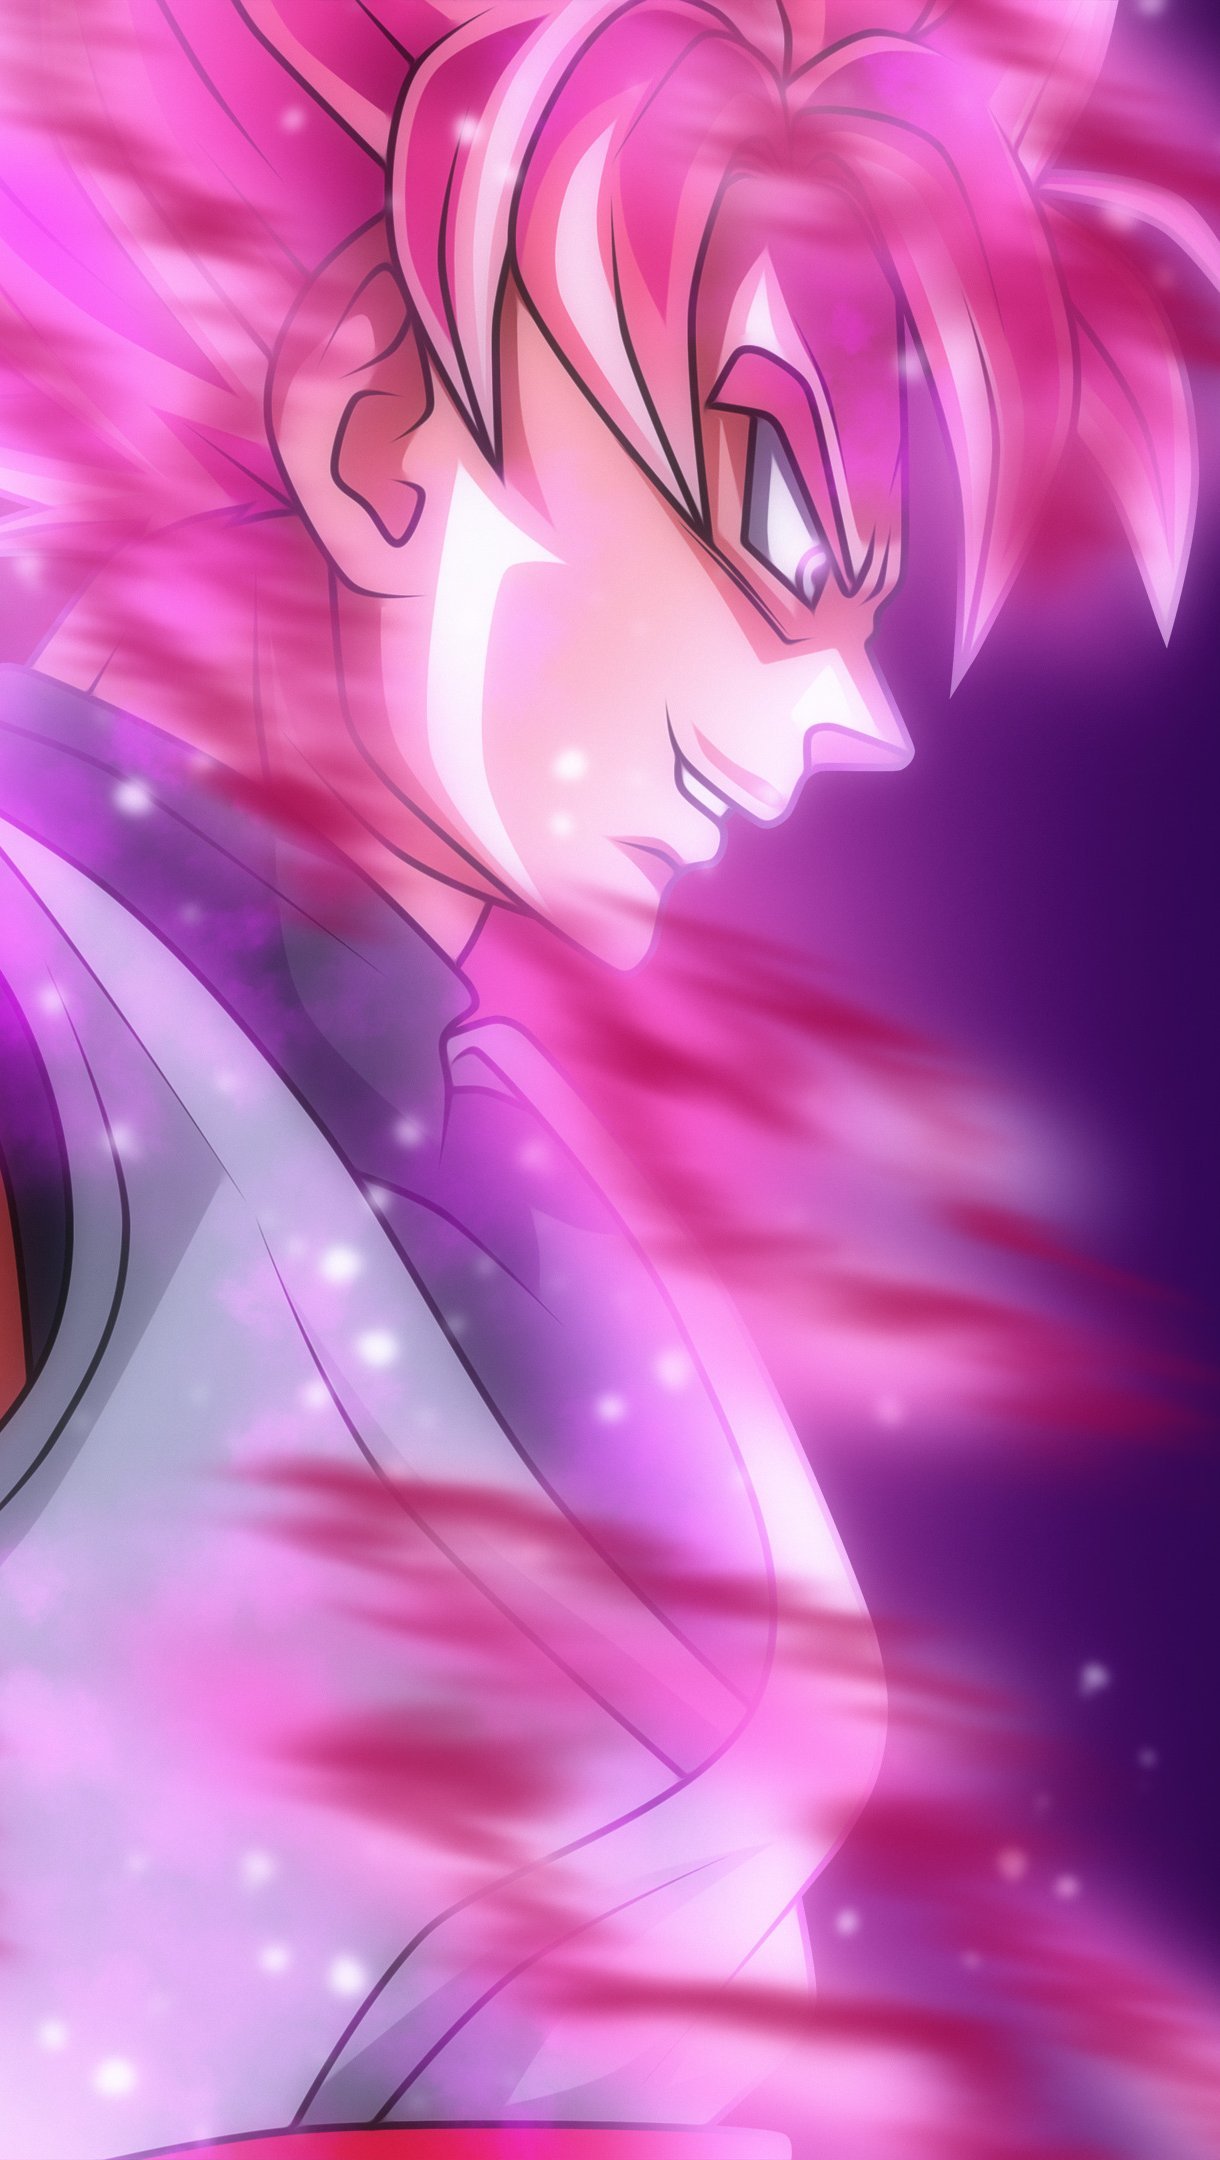 Black Goku Ssr Dragon Ball Super Anime Wallpaper 4k Hd Id4549 8217